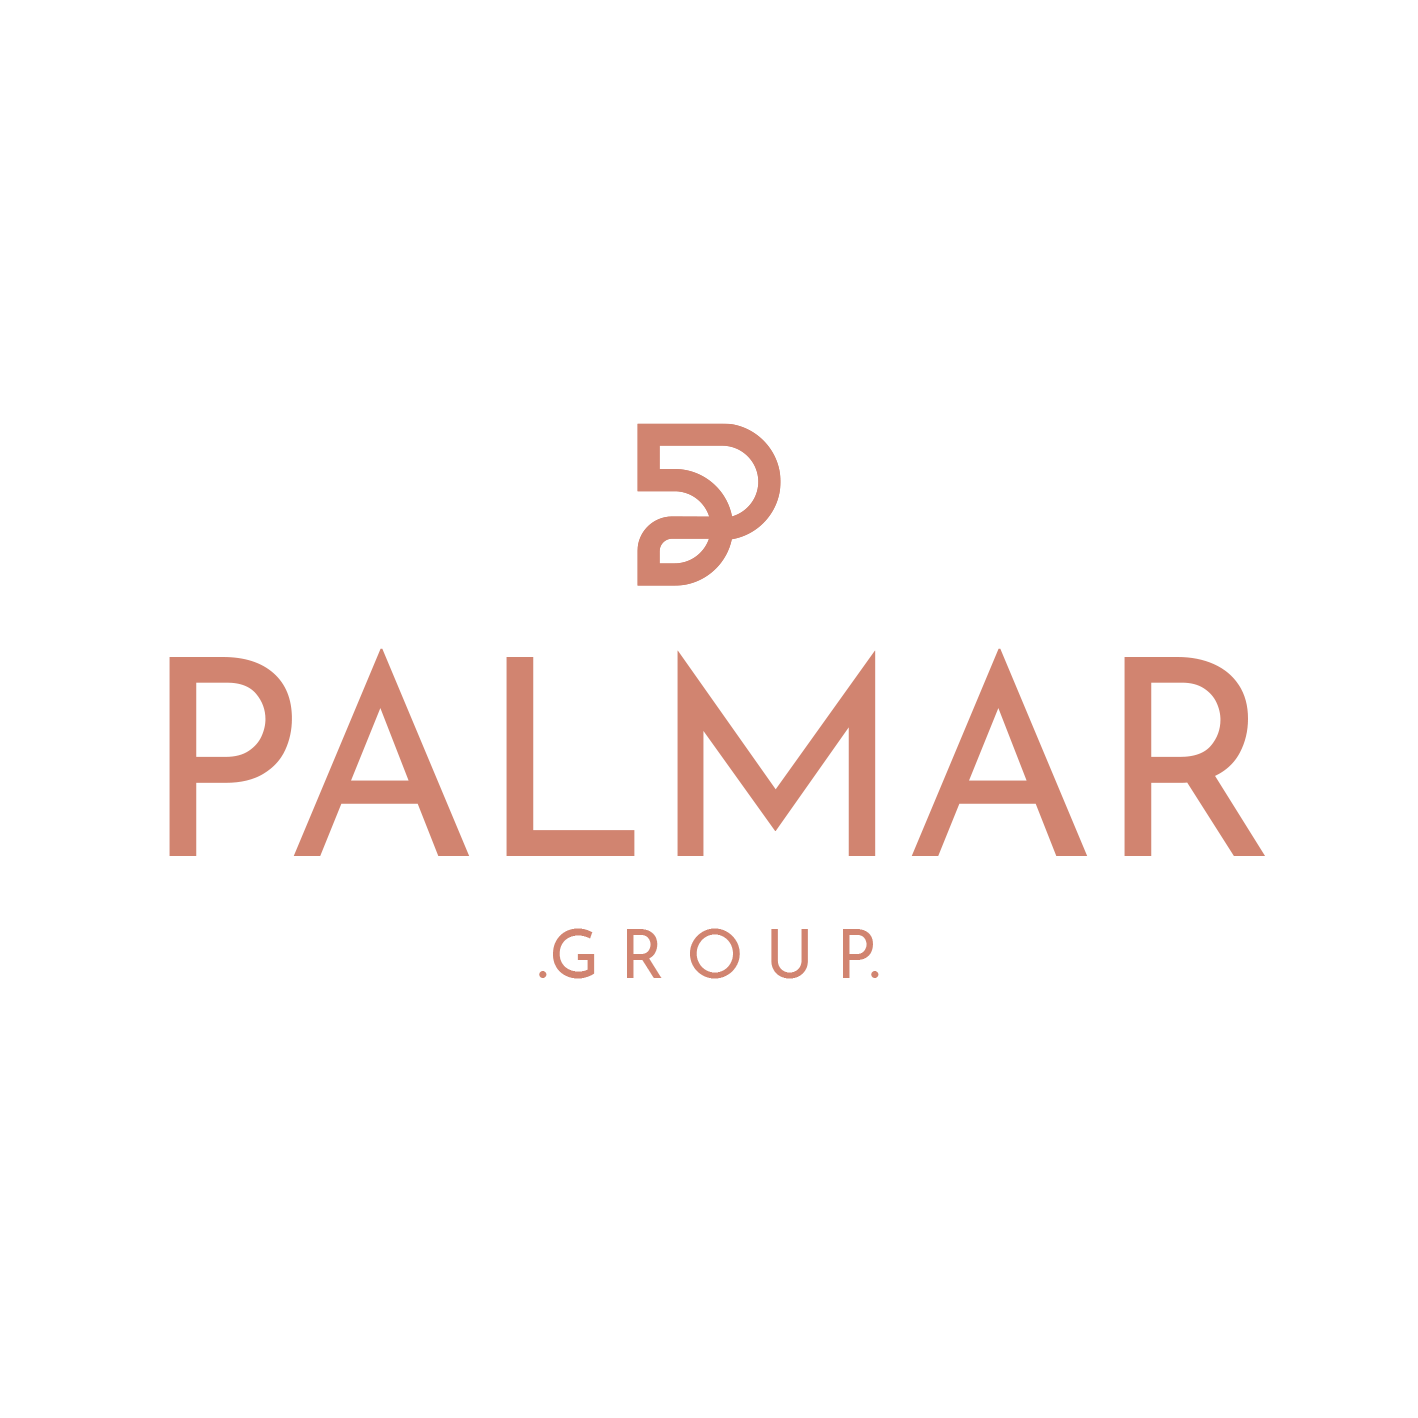 Palmar Group